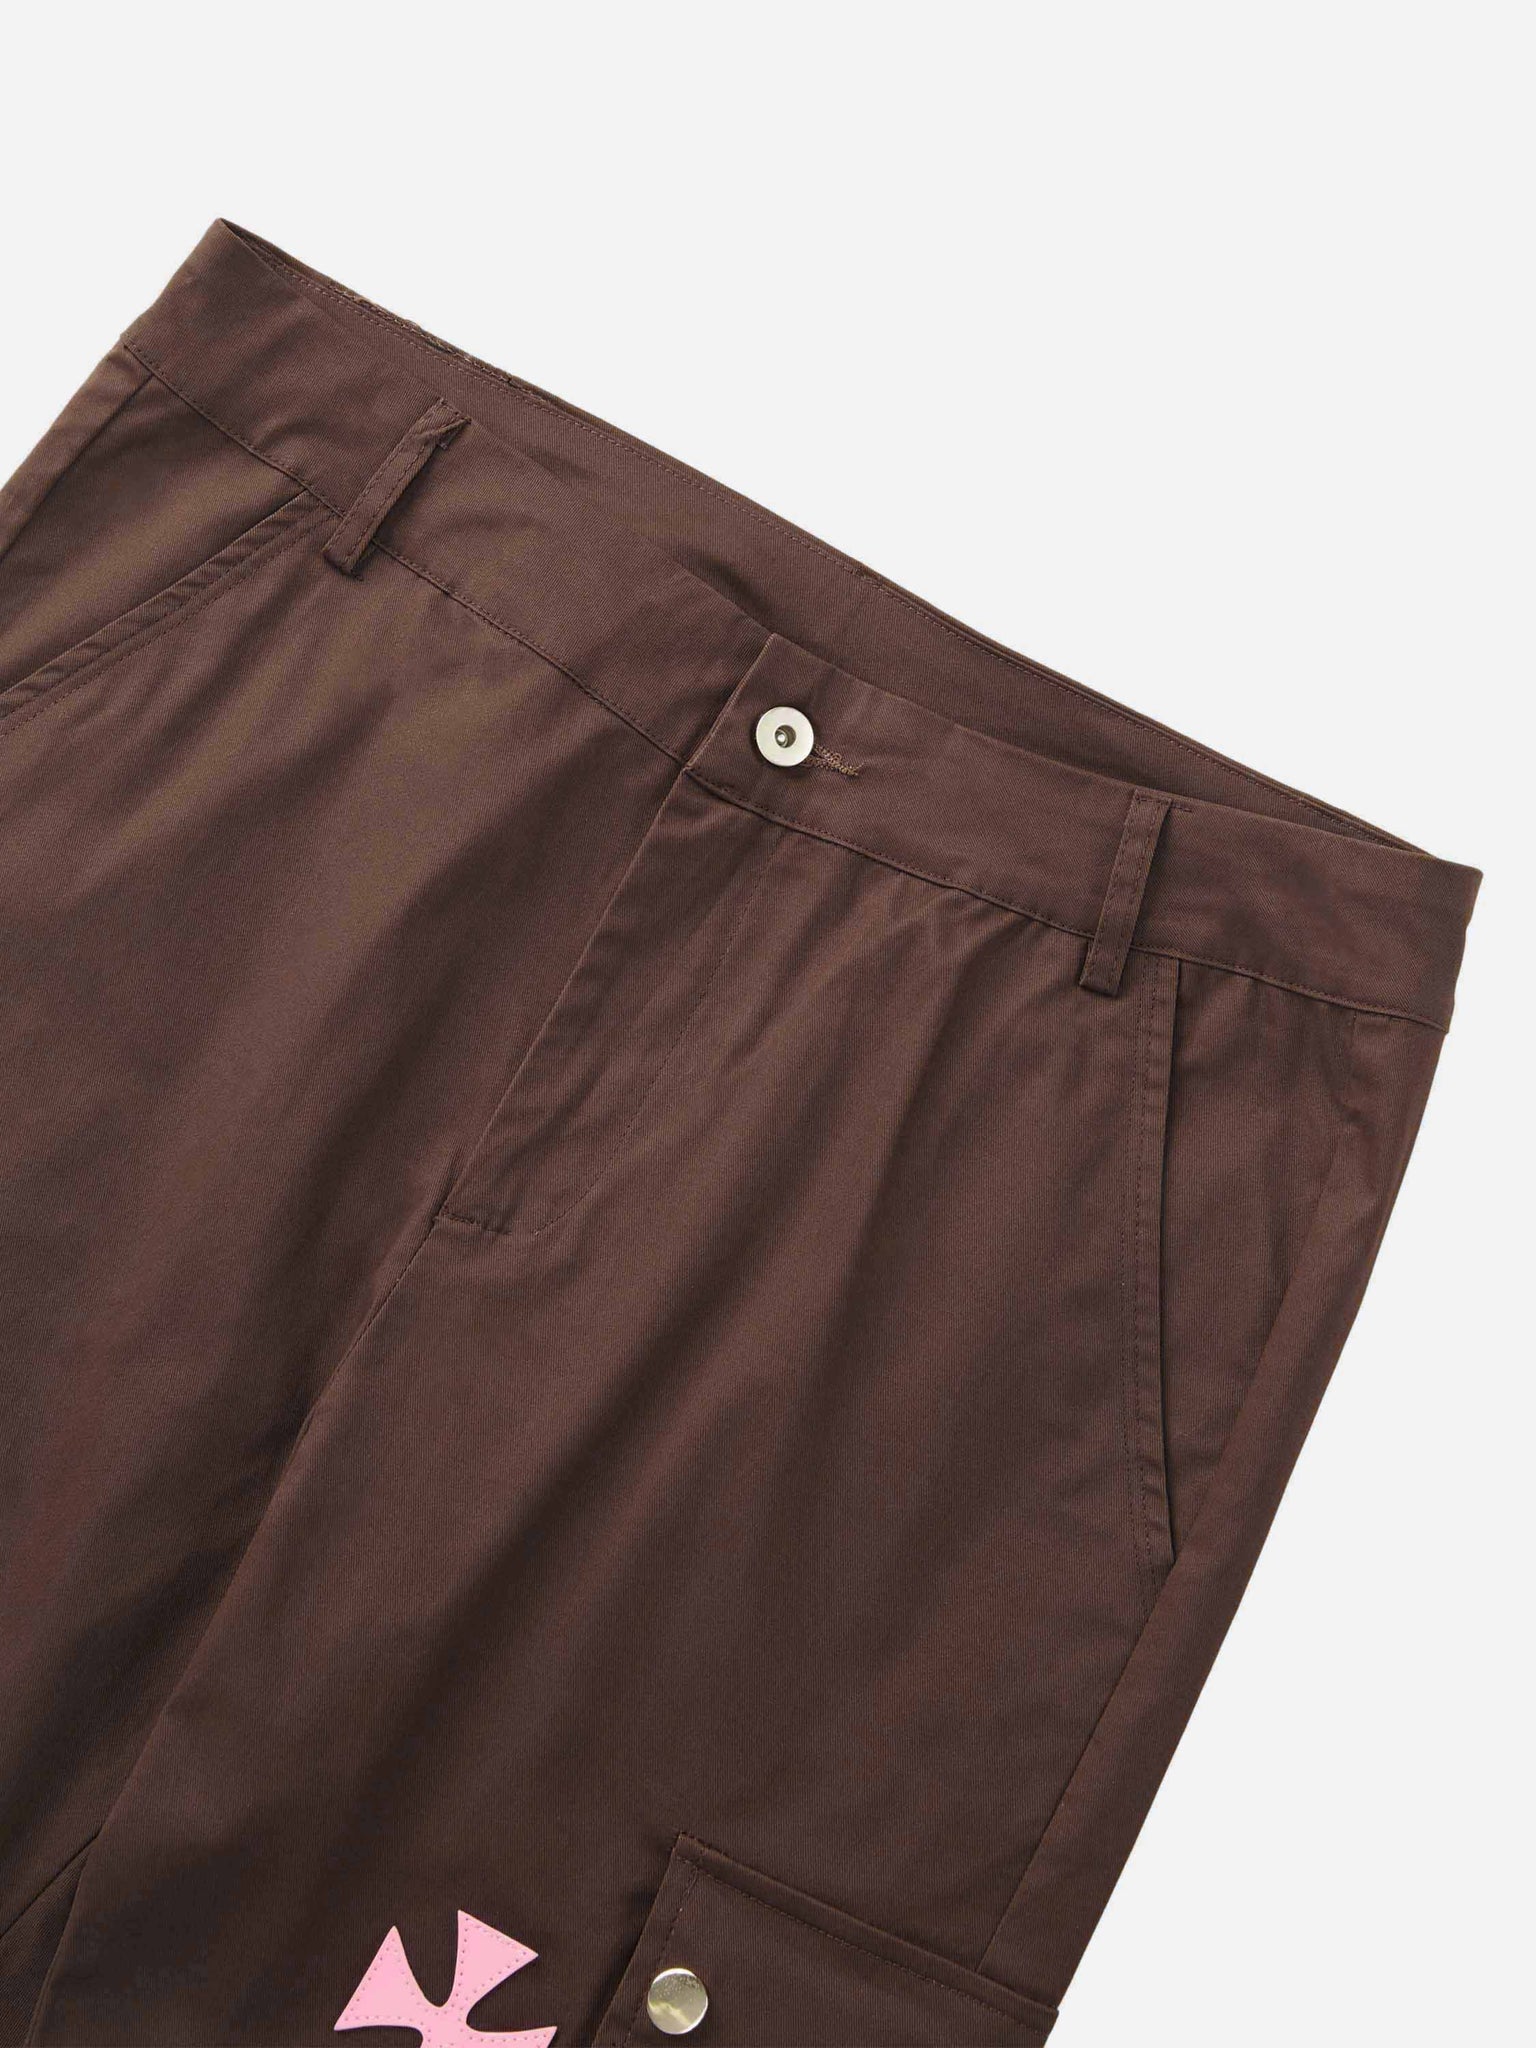 Thesupermade American Casual Versatile Multi-pocket Casual Pants - 1831